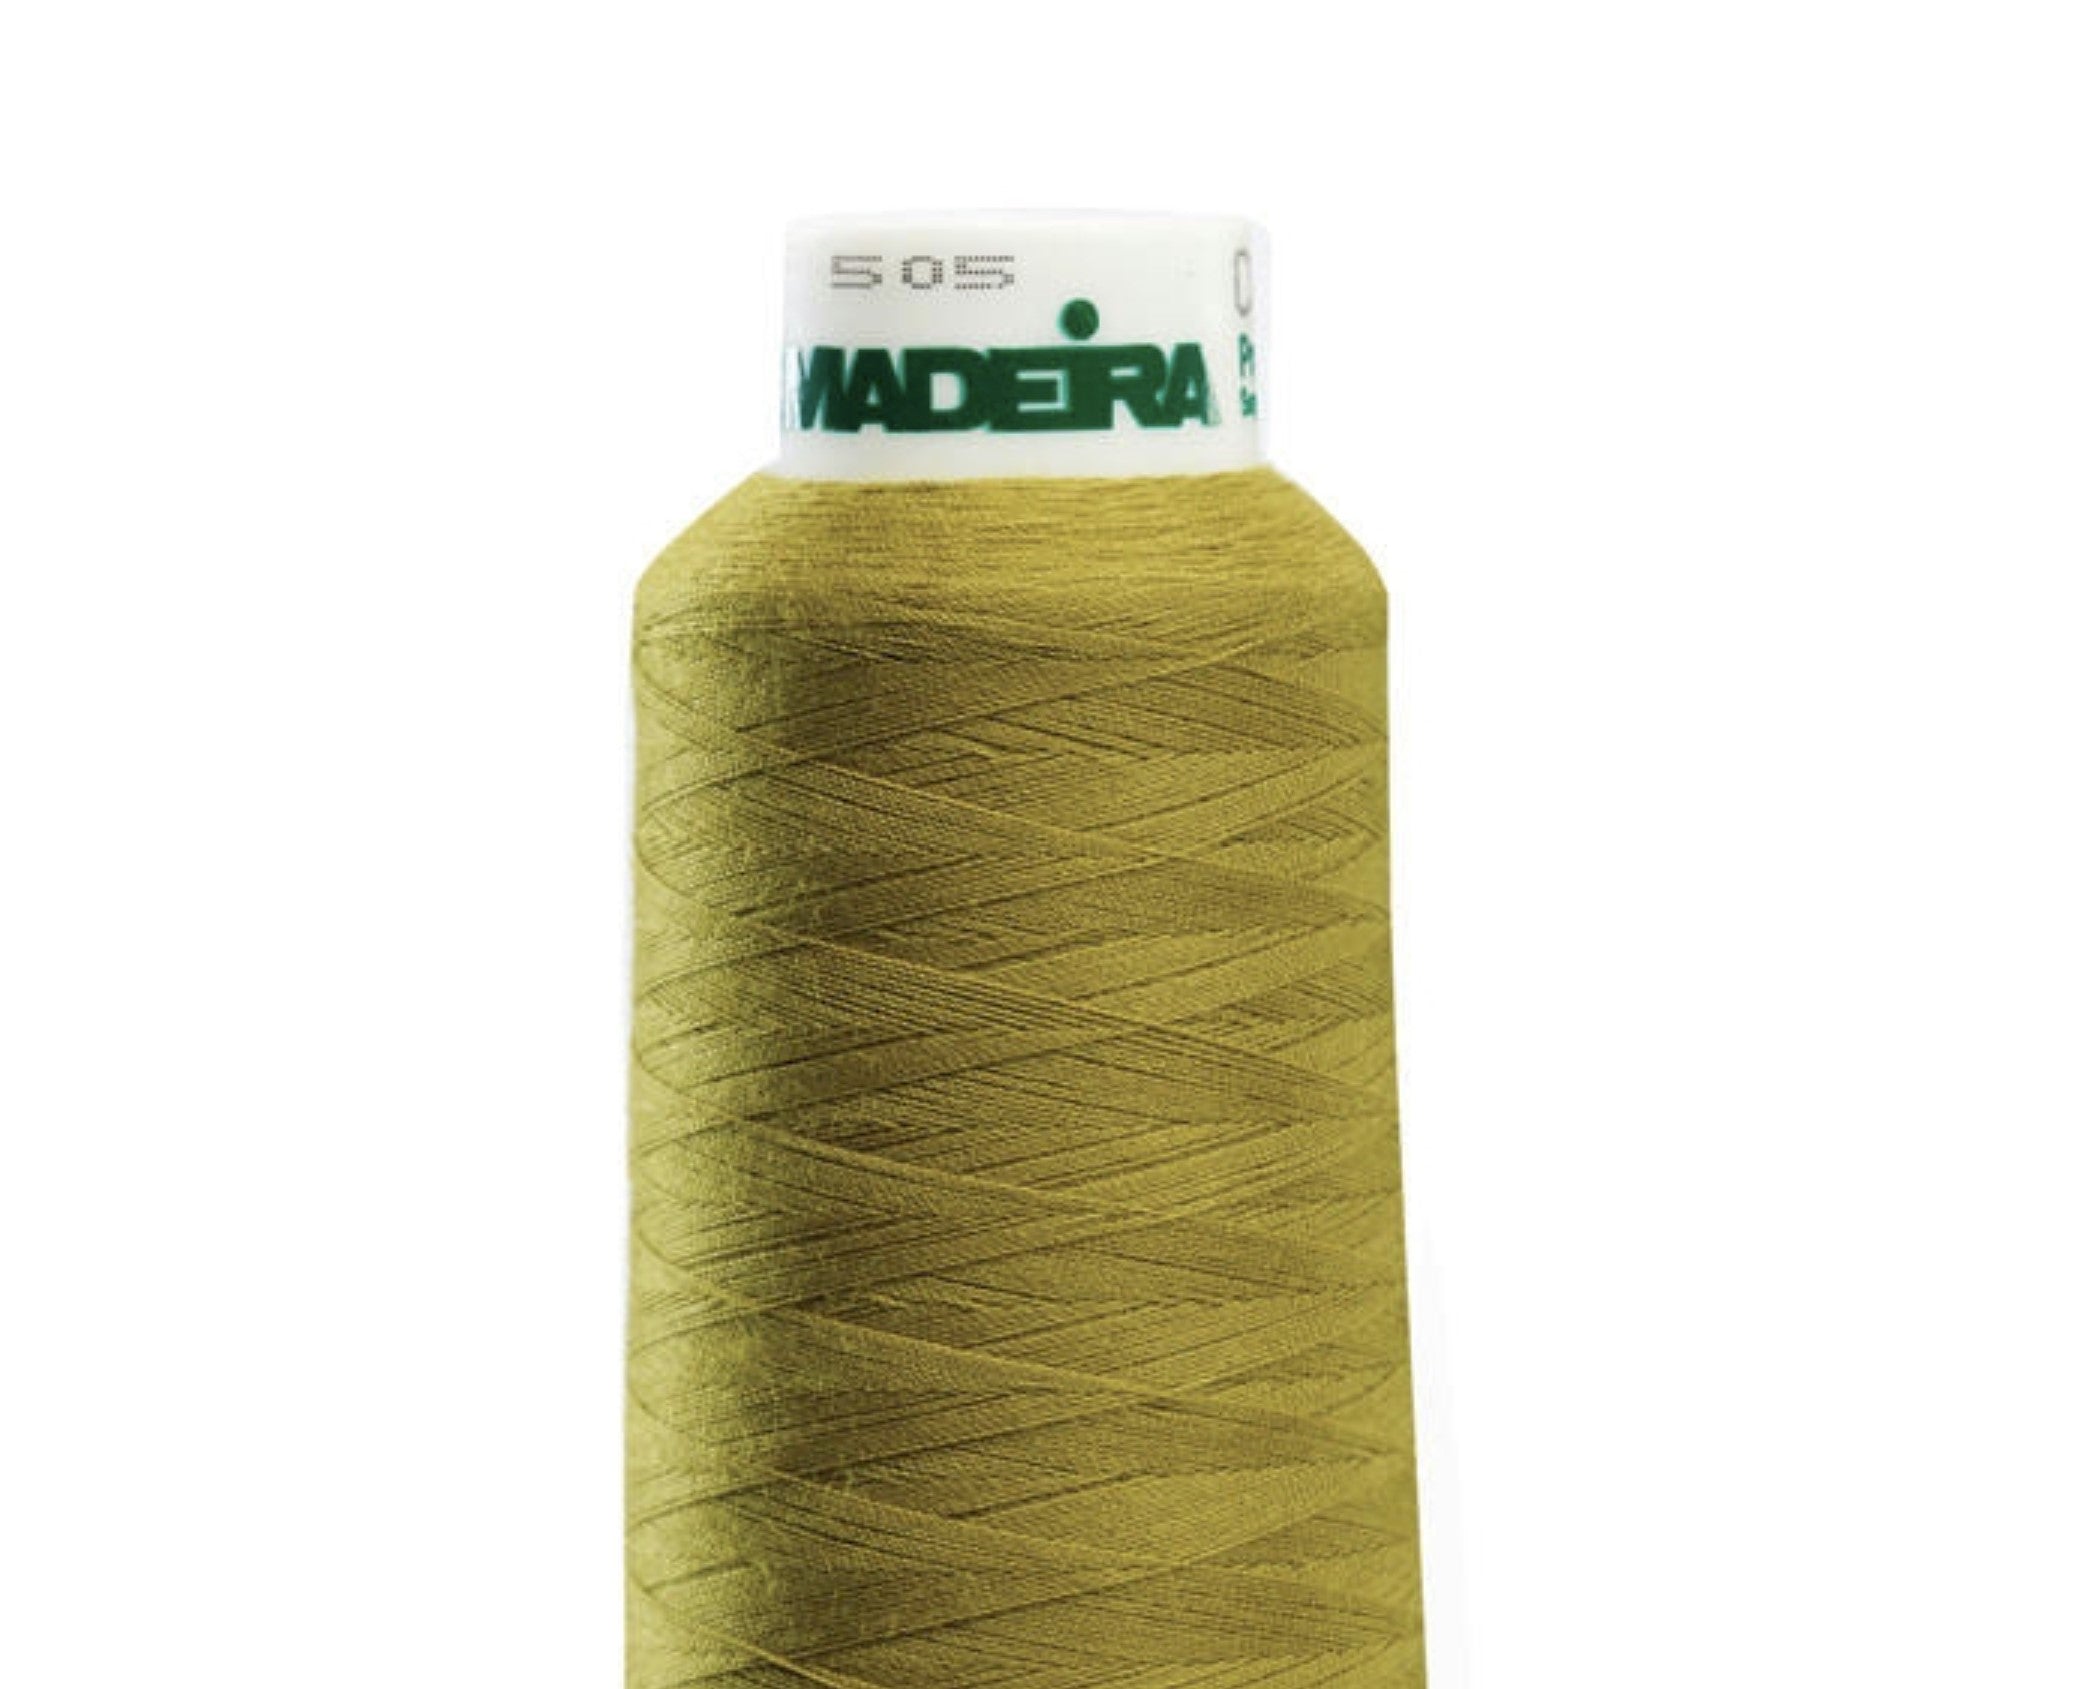 Olive Drab Color, Aerolock Premium Serger Thread, Ref. 8992 by Madeira®